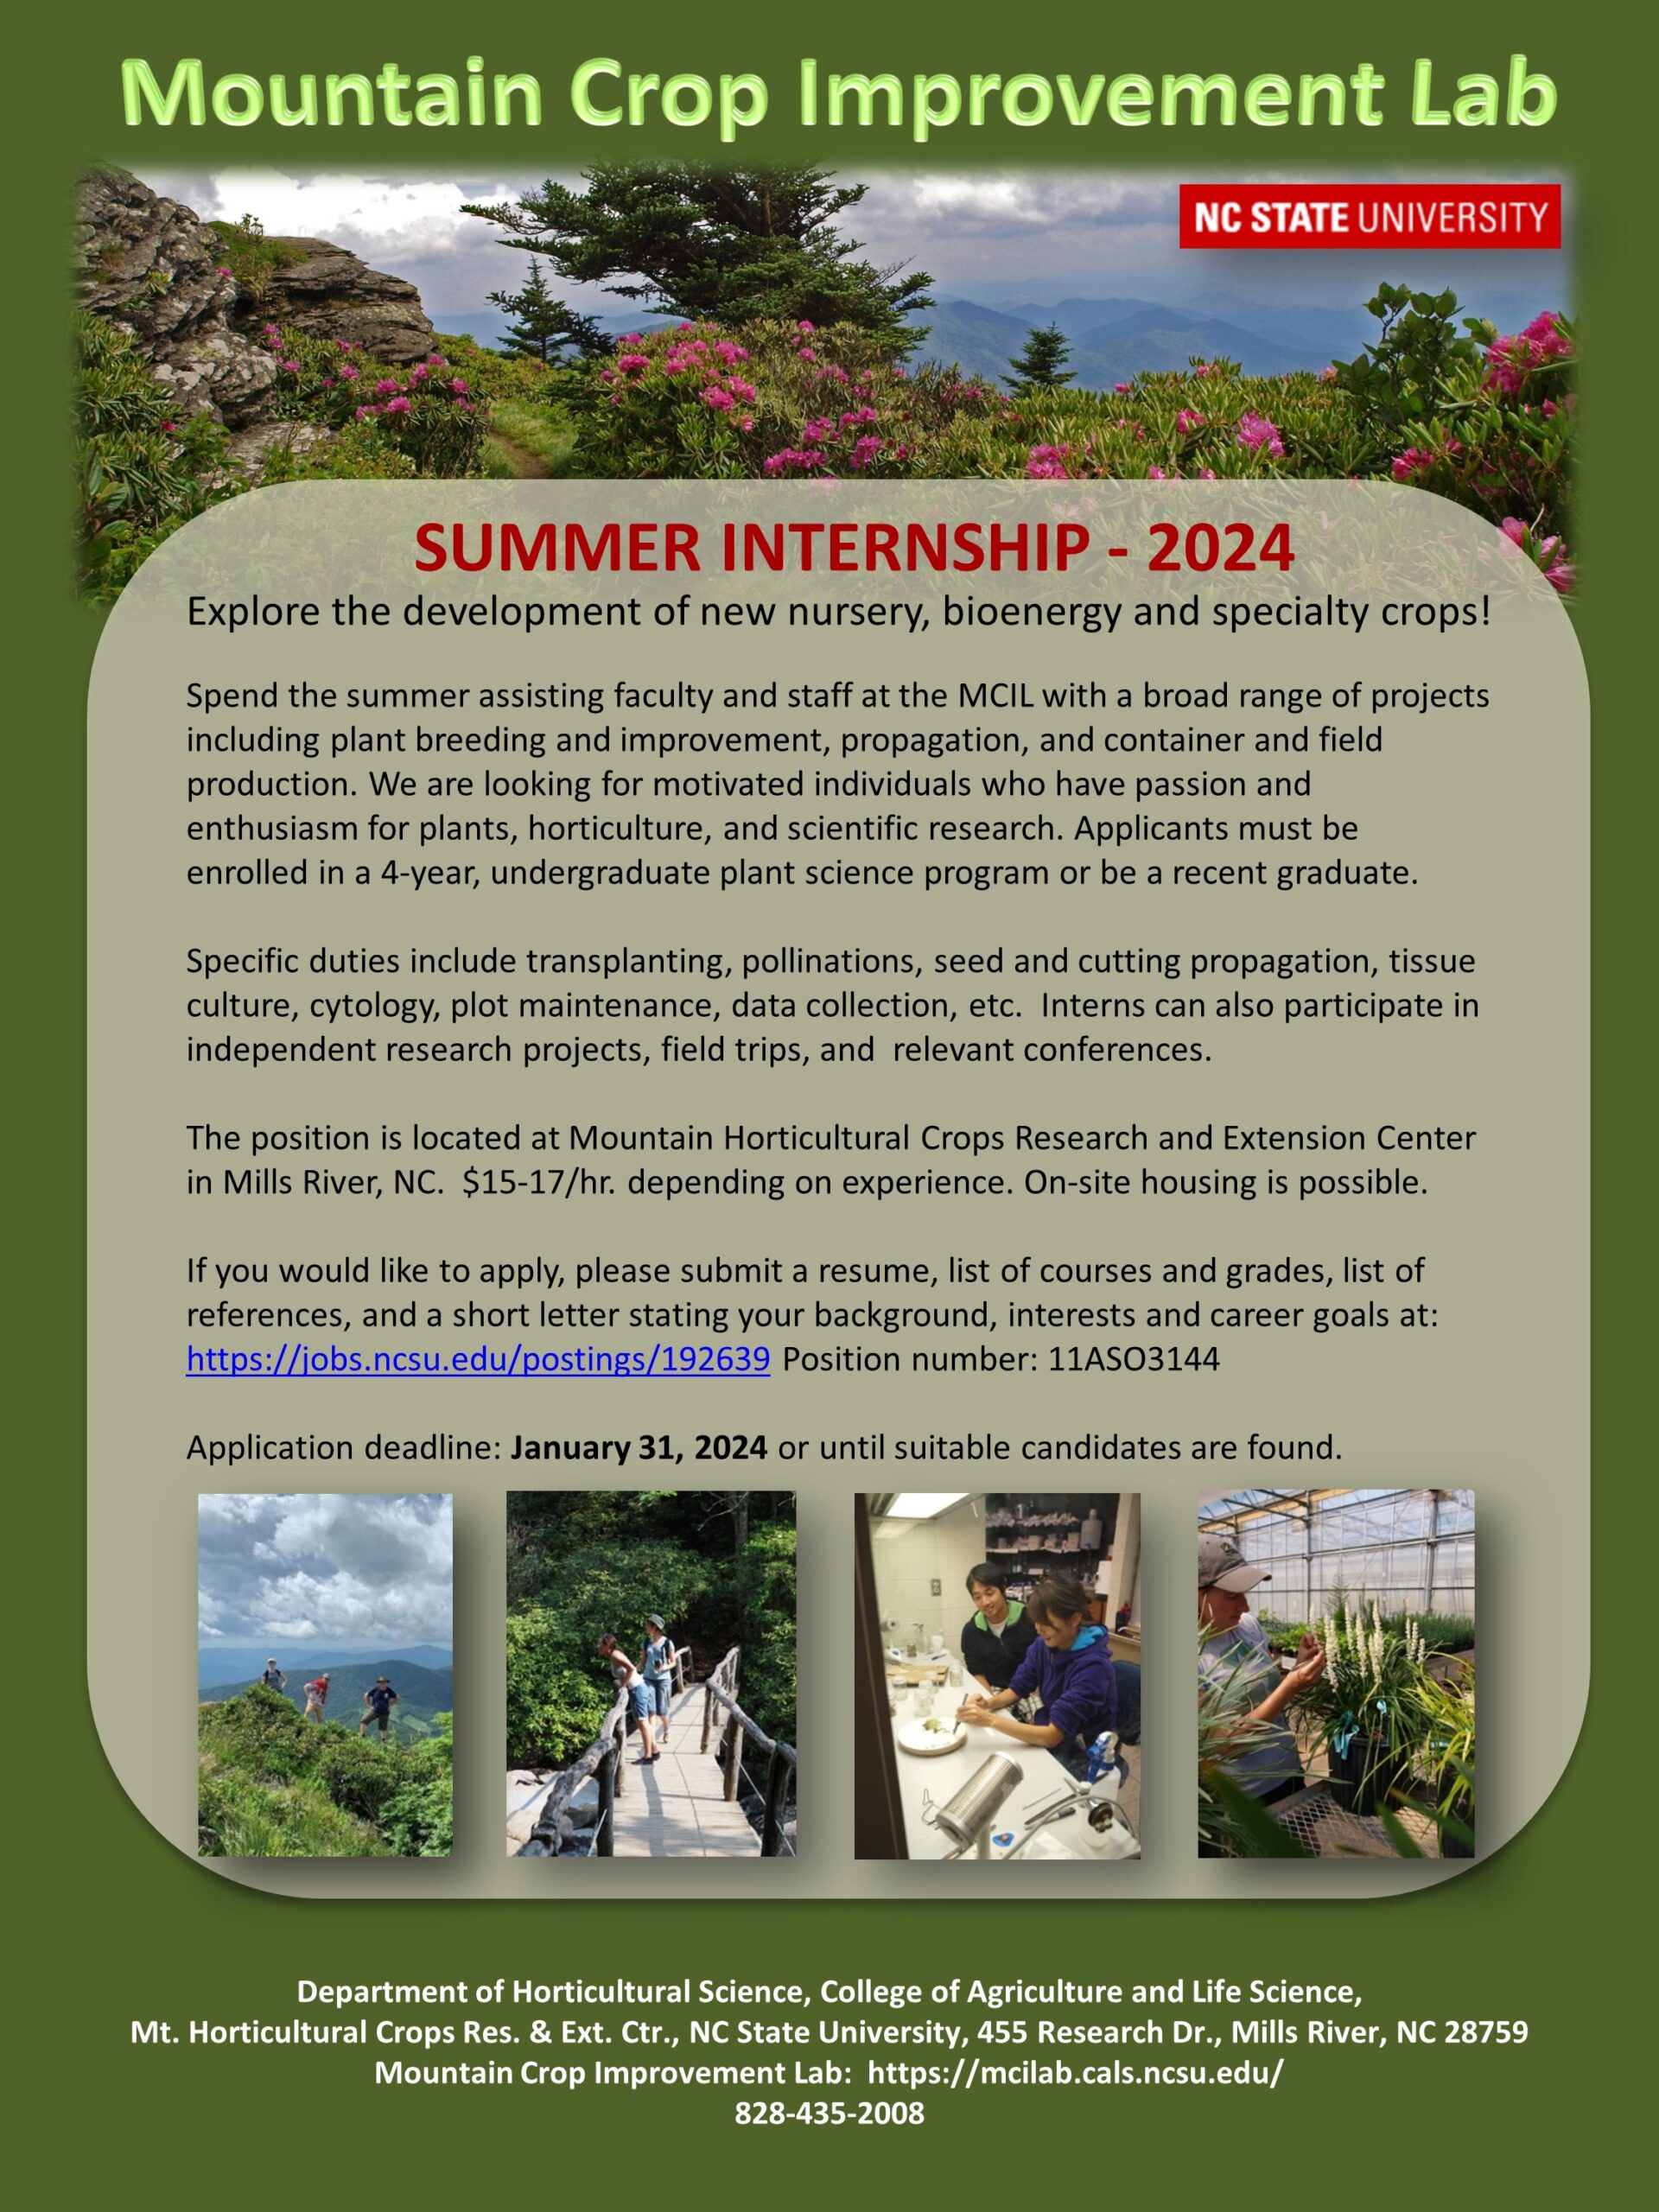 summer internship brochure picture